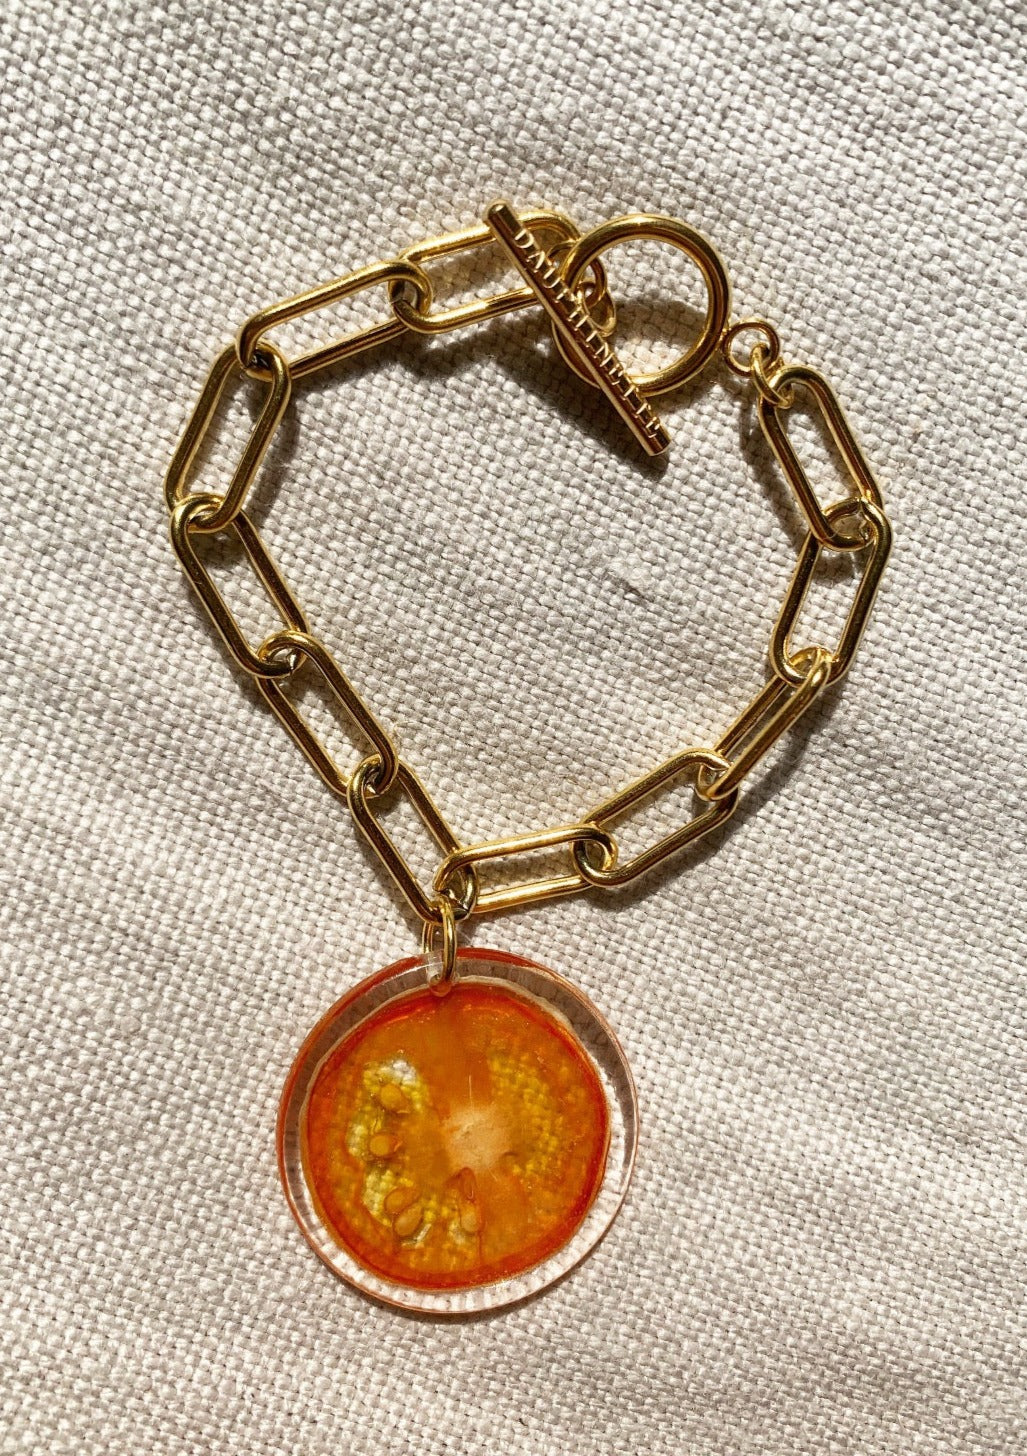 Tomato Chain Bracelet